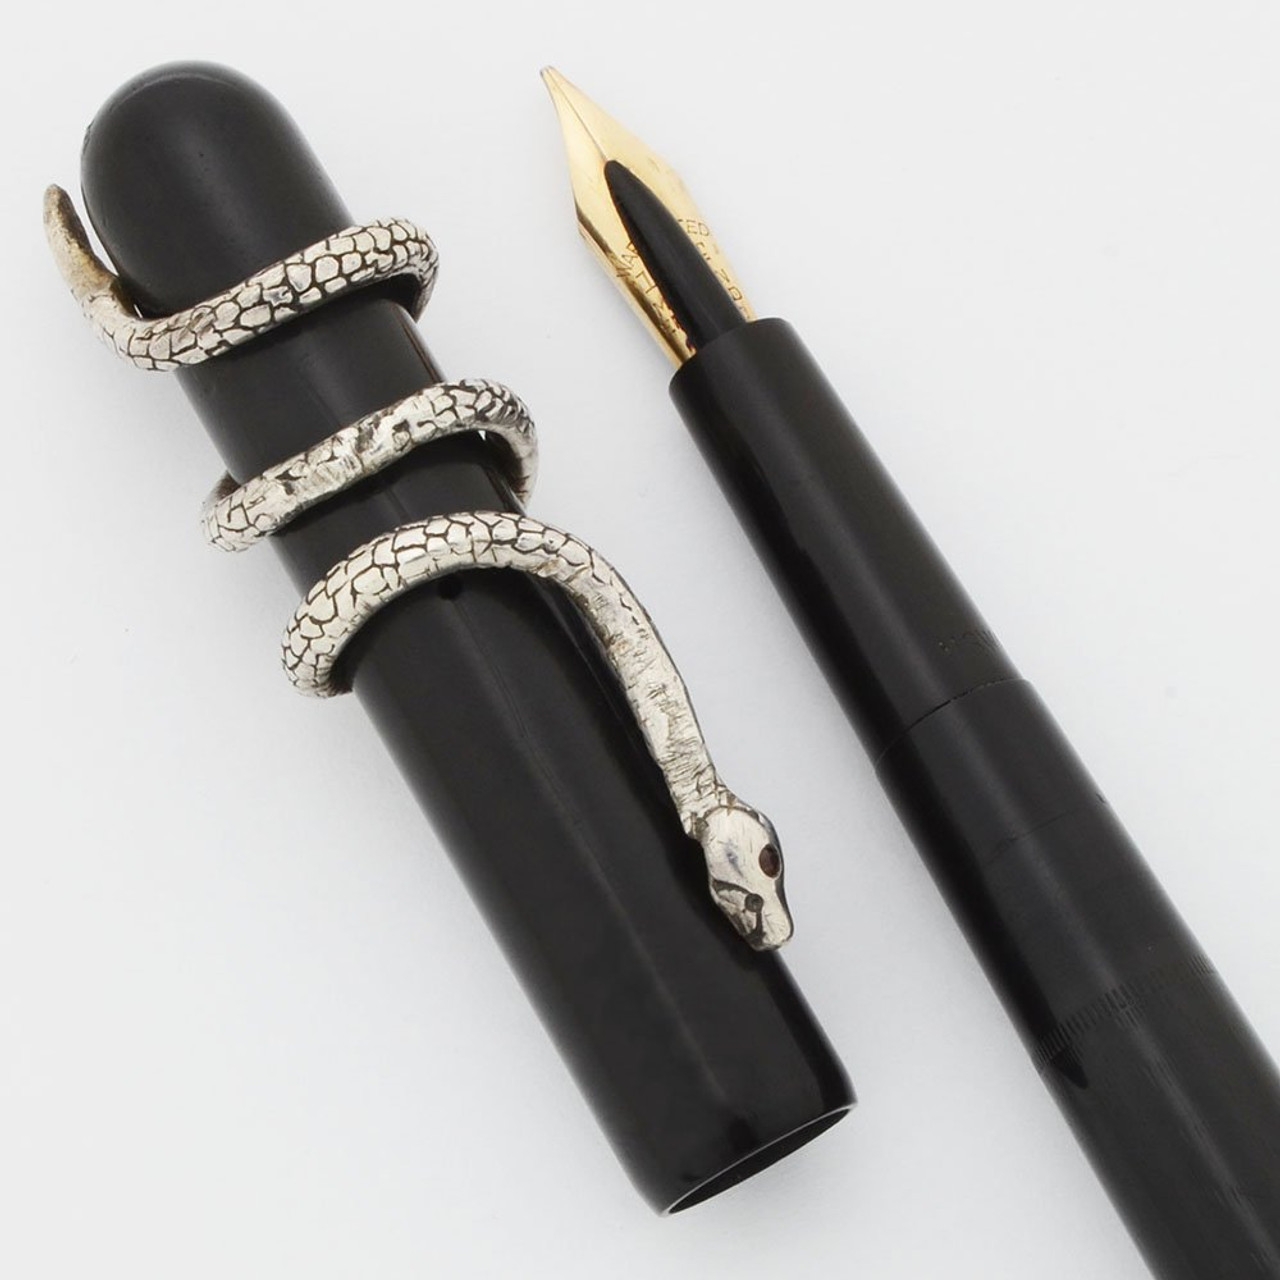 Mabie Todd Swan 1500 Fountain Pen - BCHR Eyedropper, Overfeed, Snake  Rollstop, Fine Flexible Nib (Excellent, Works Well) - Peyton Street Pens